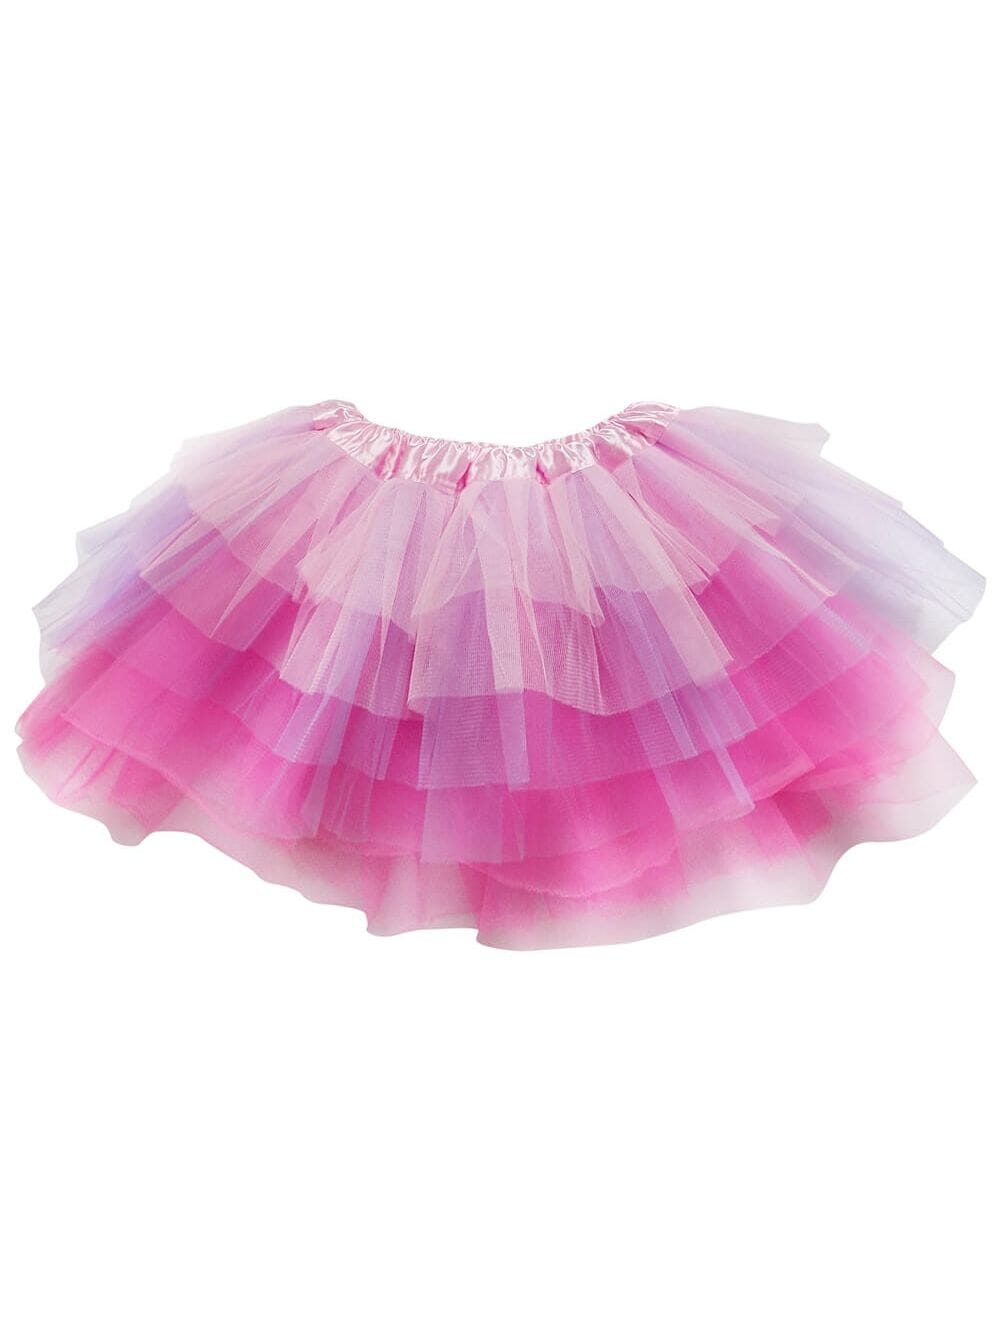 Pink, Lavender, Neon Pink 6 Layer Tutu Skirt Costume for Girls, Women, Plus - Sydney So Sweet